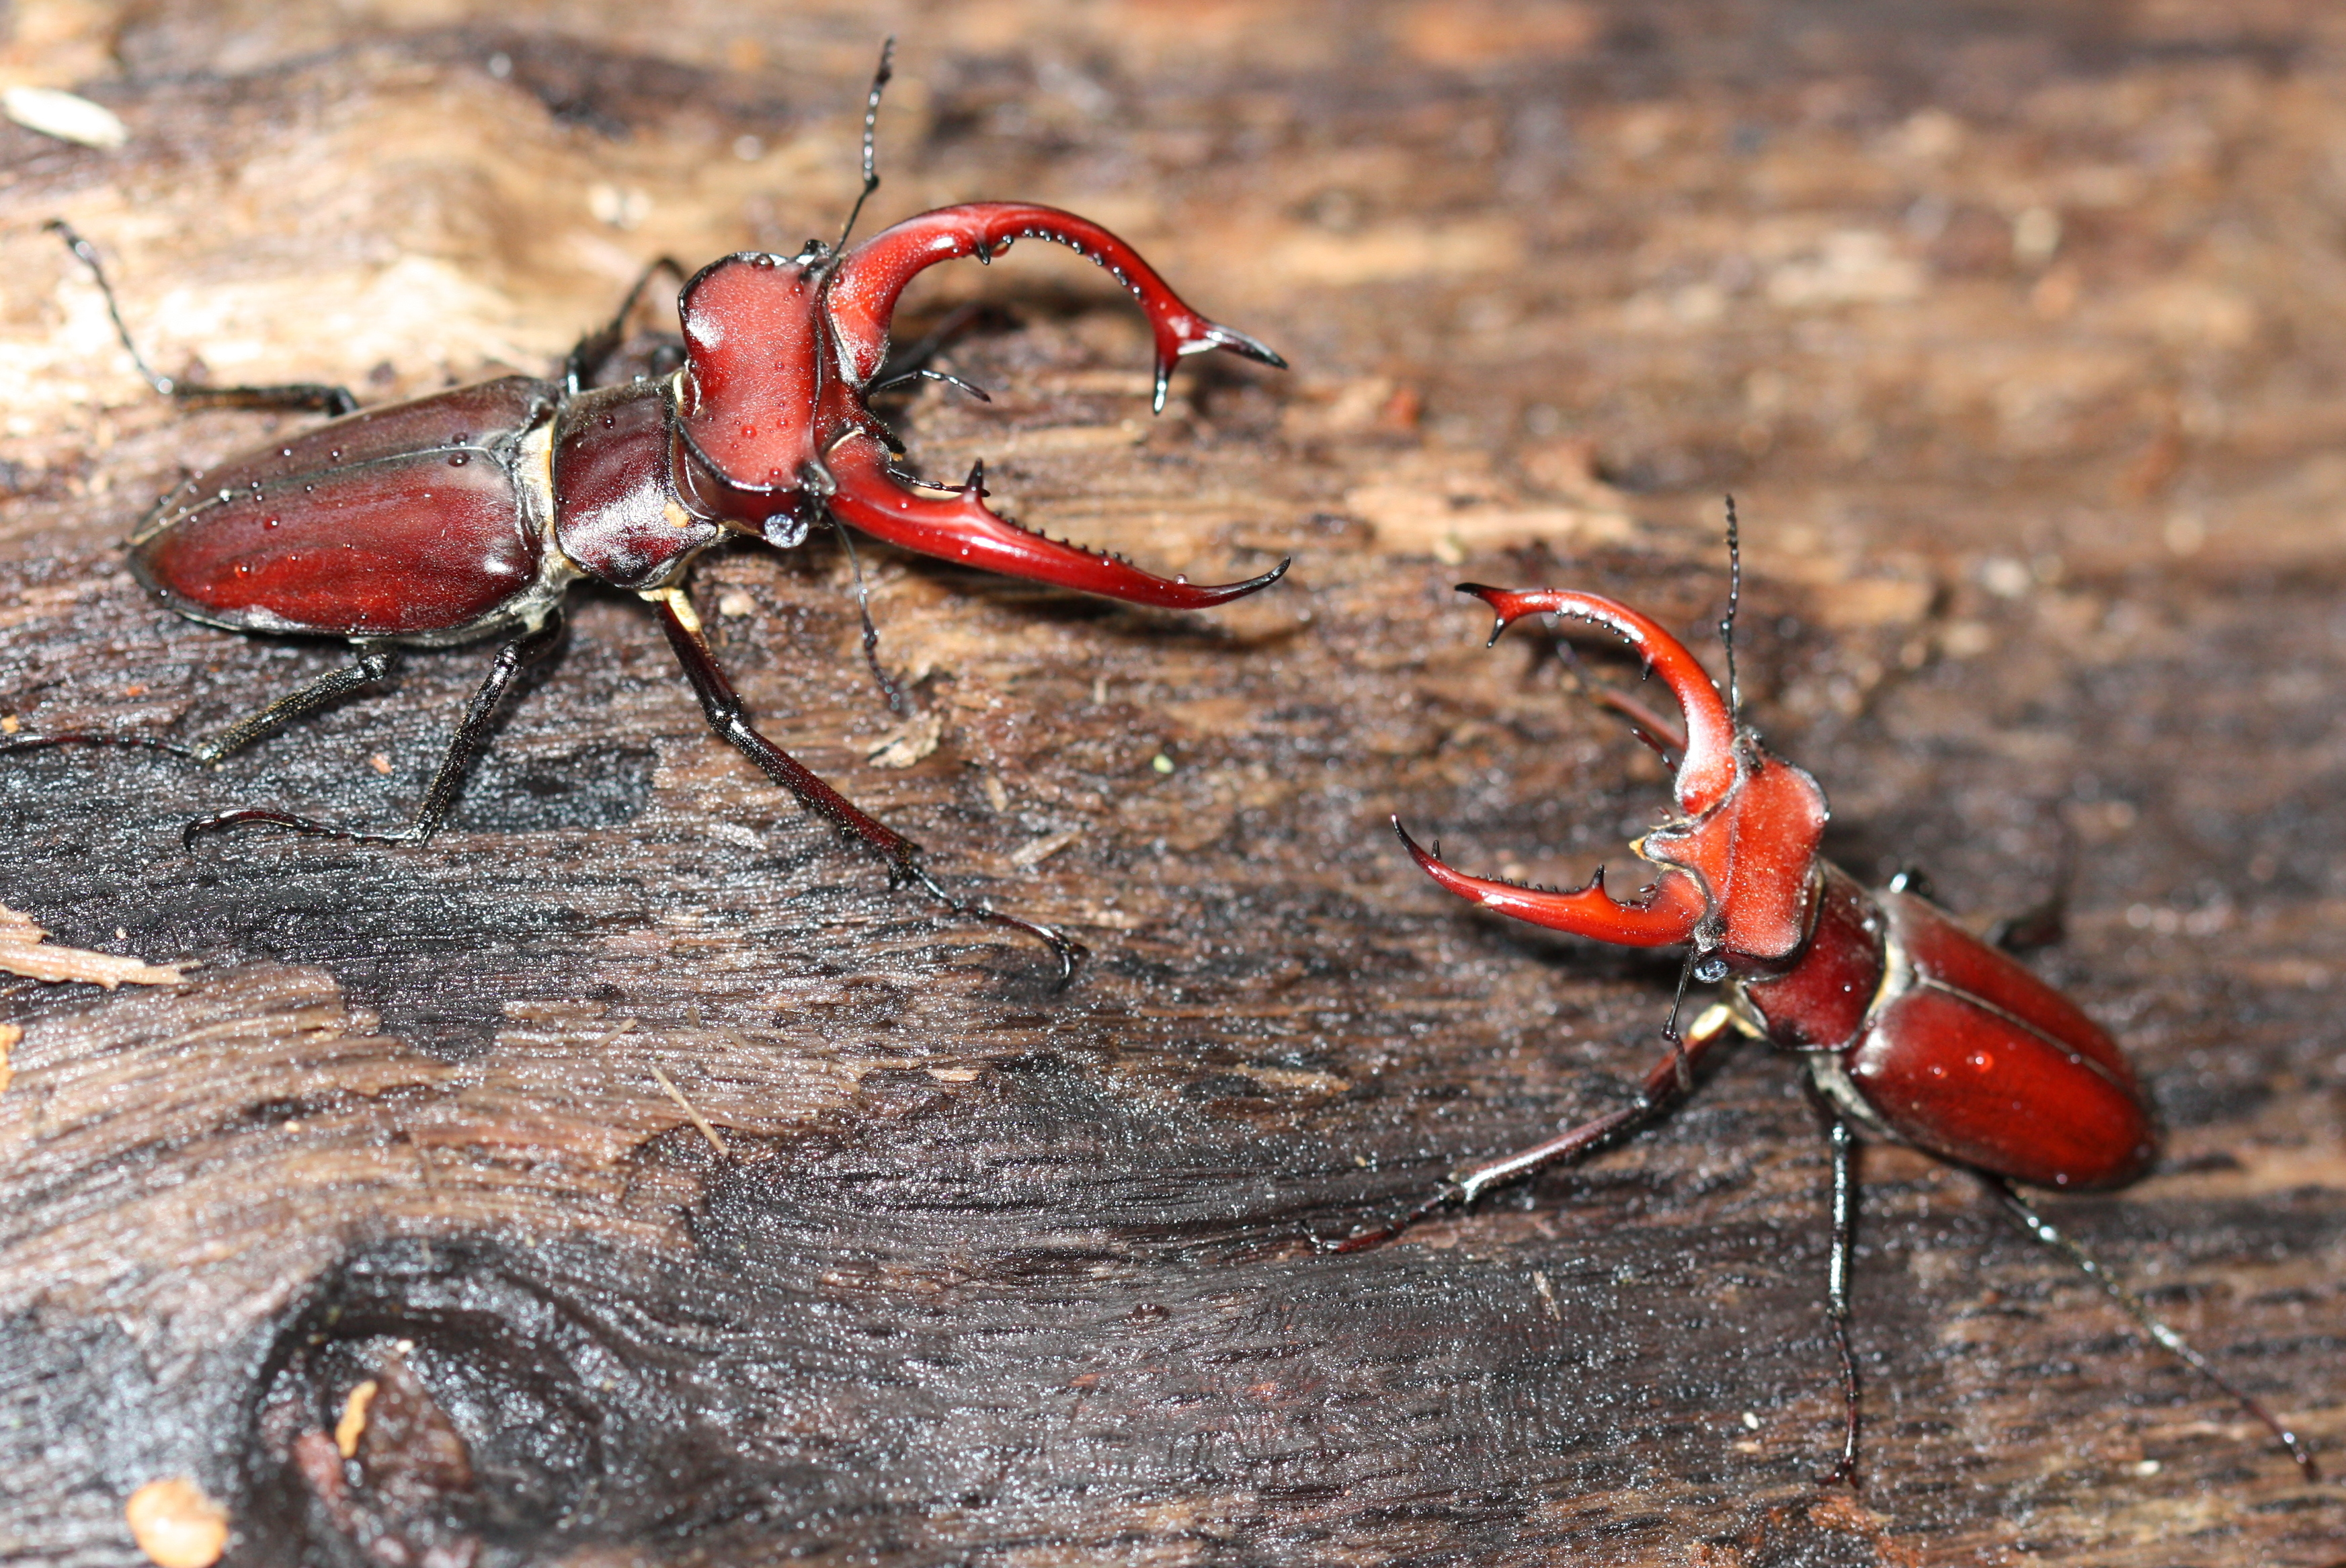 Giant Stag Beetles – CompassLive